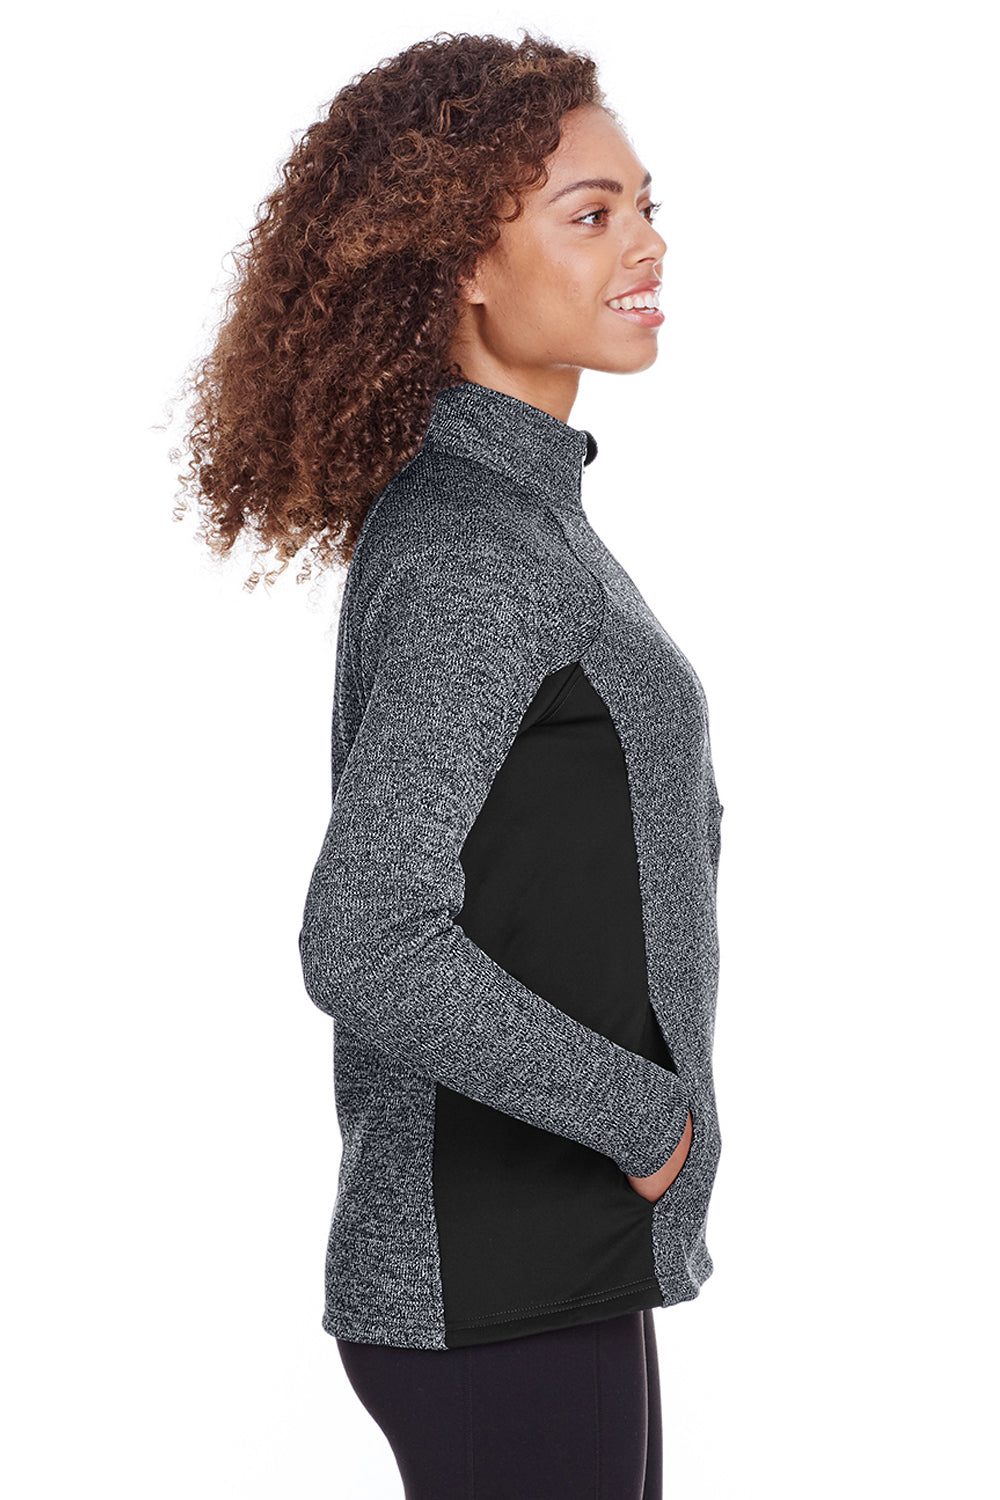 Spyder S16562 Womens Constant 1/4 Zip Sweater Heather Black Side